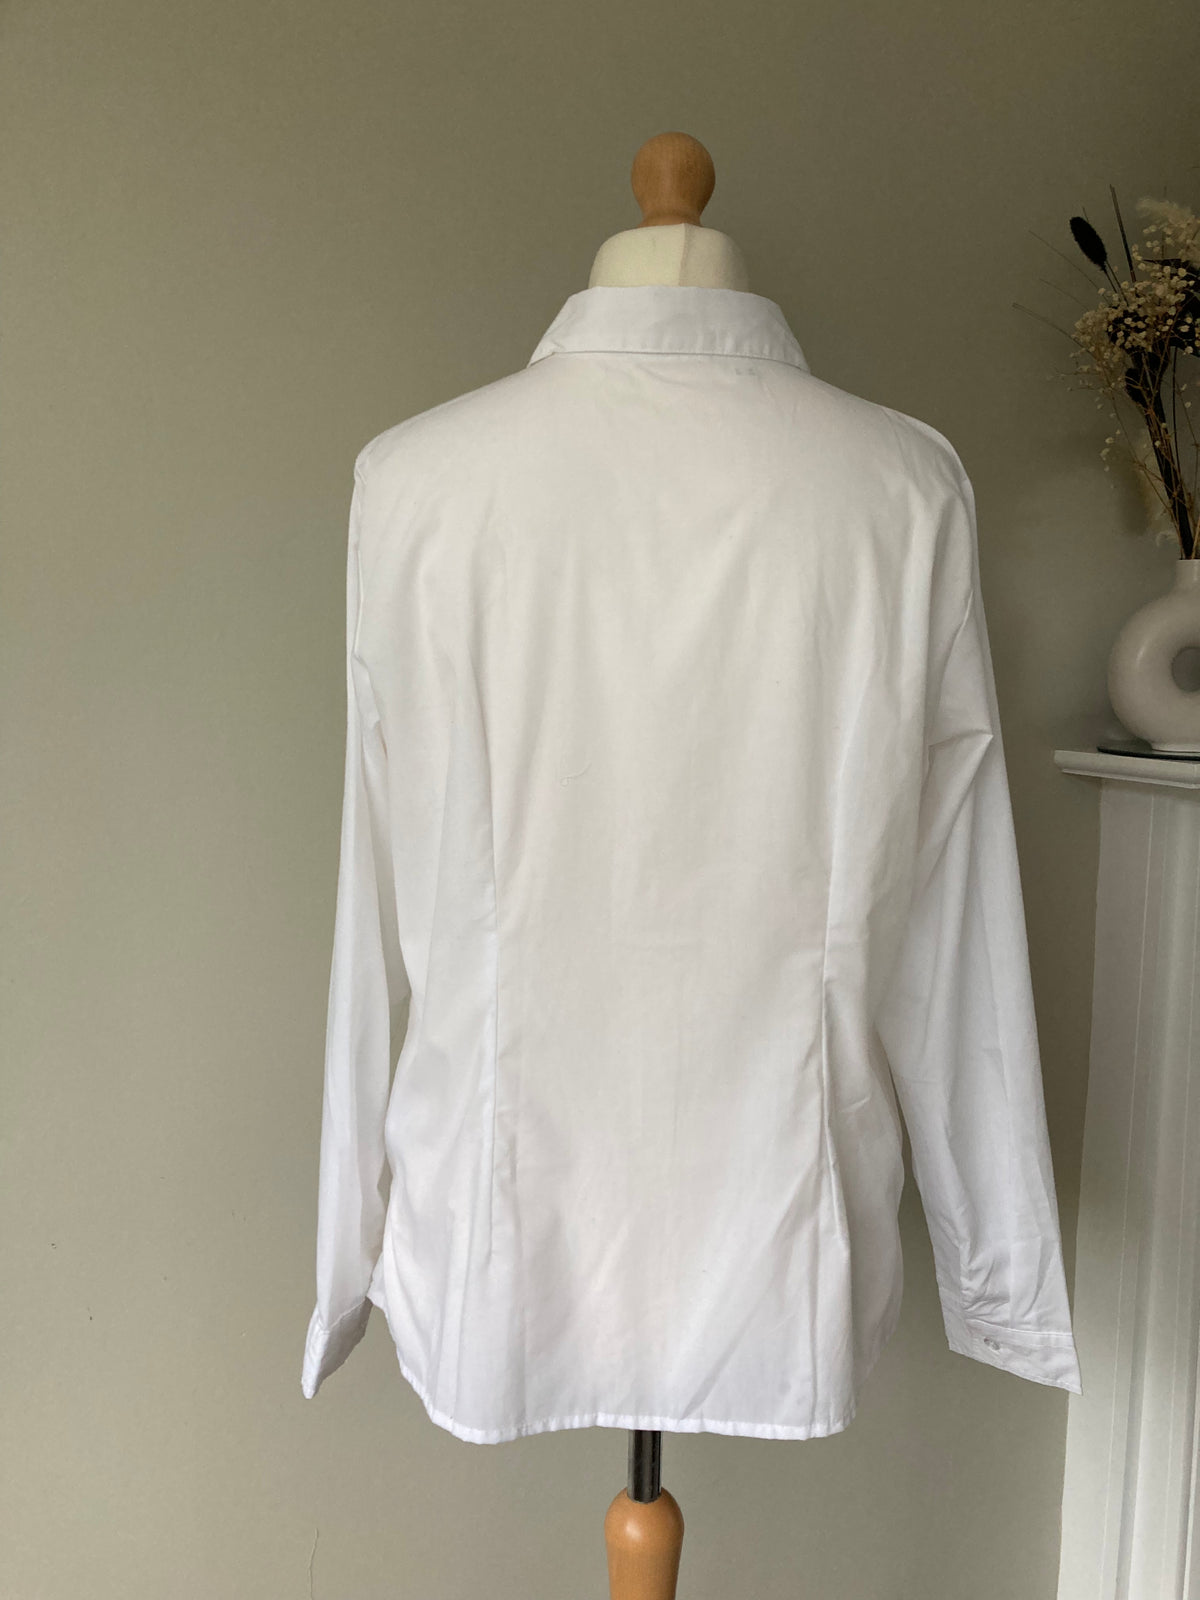 White long sleeve shirt by BPC